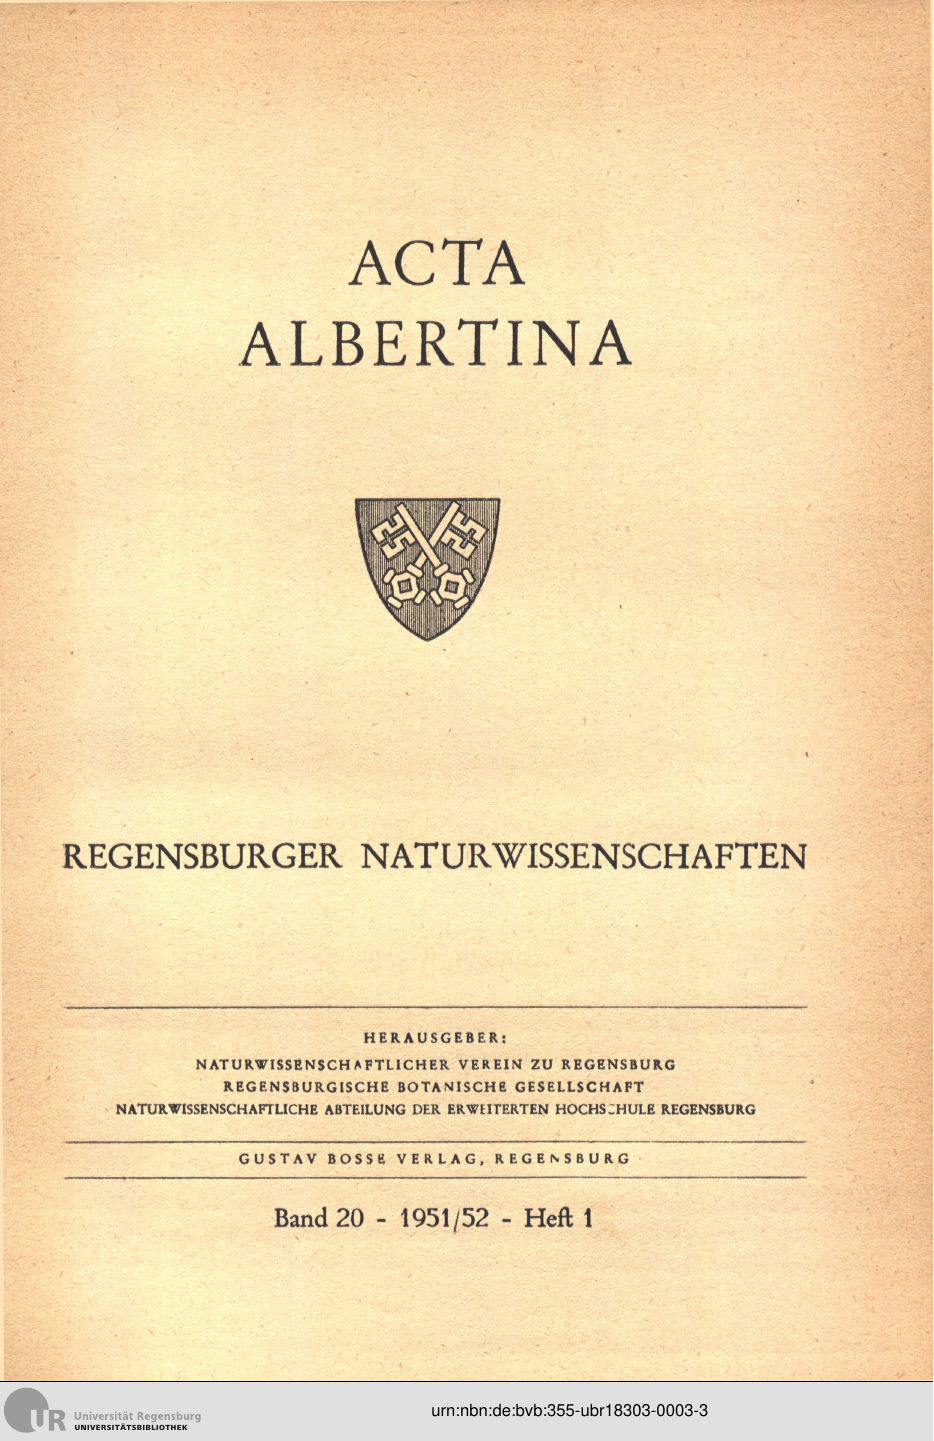 					Ansehen Bd. 20 Nr. 1 (1951): Acta Albertina Ratisbonensia
				